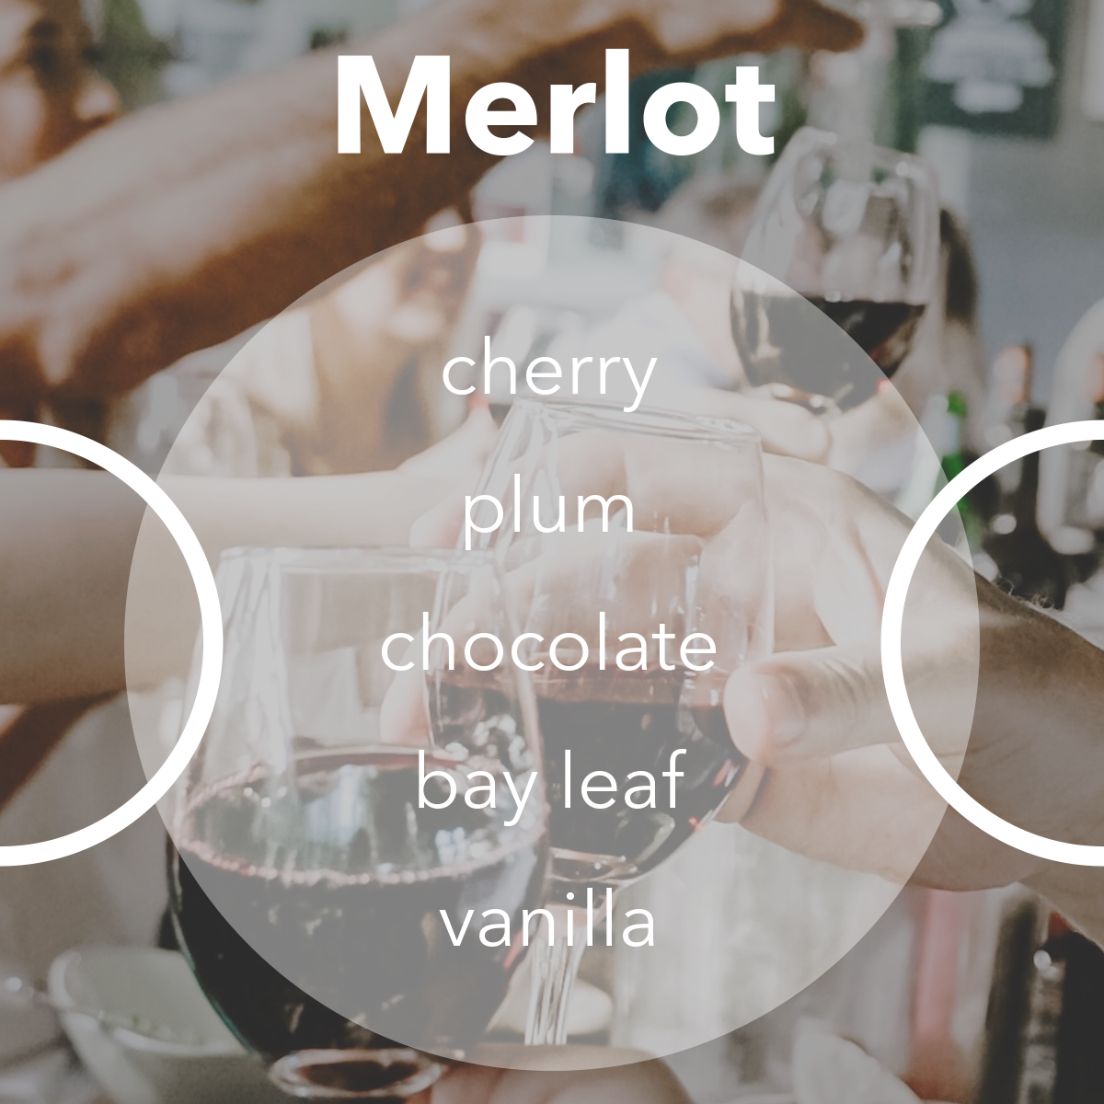 Merlot wine tasting notes.